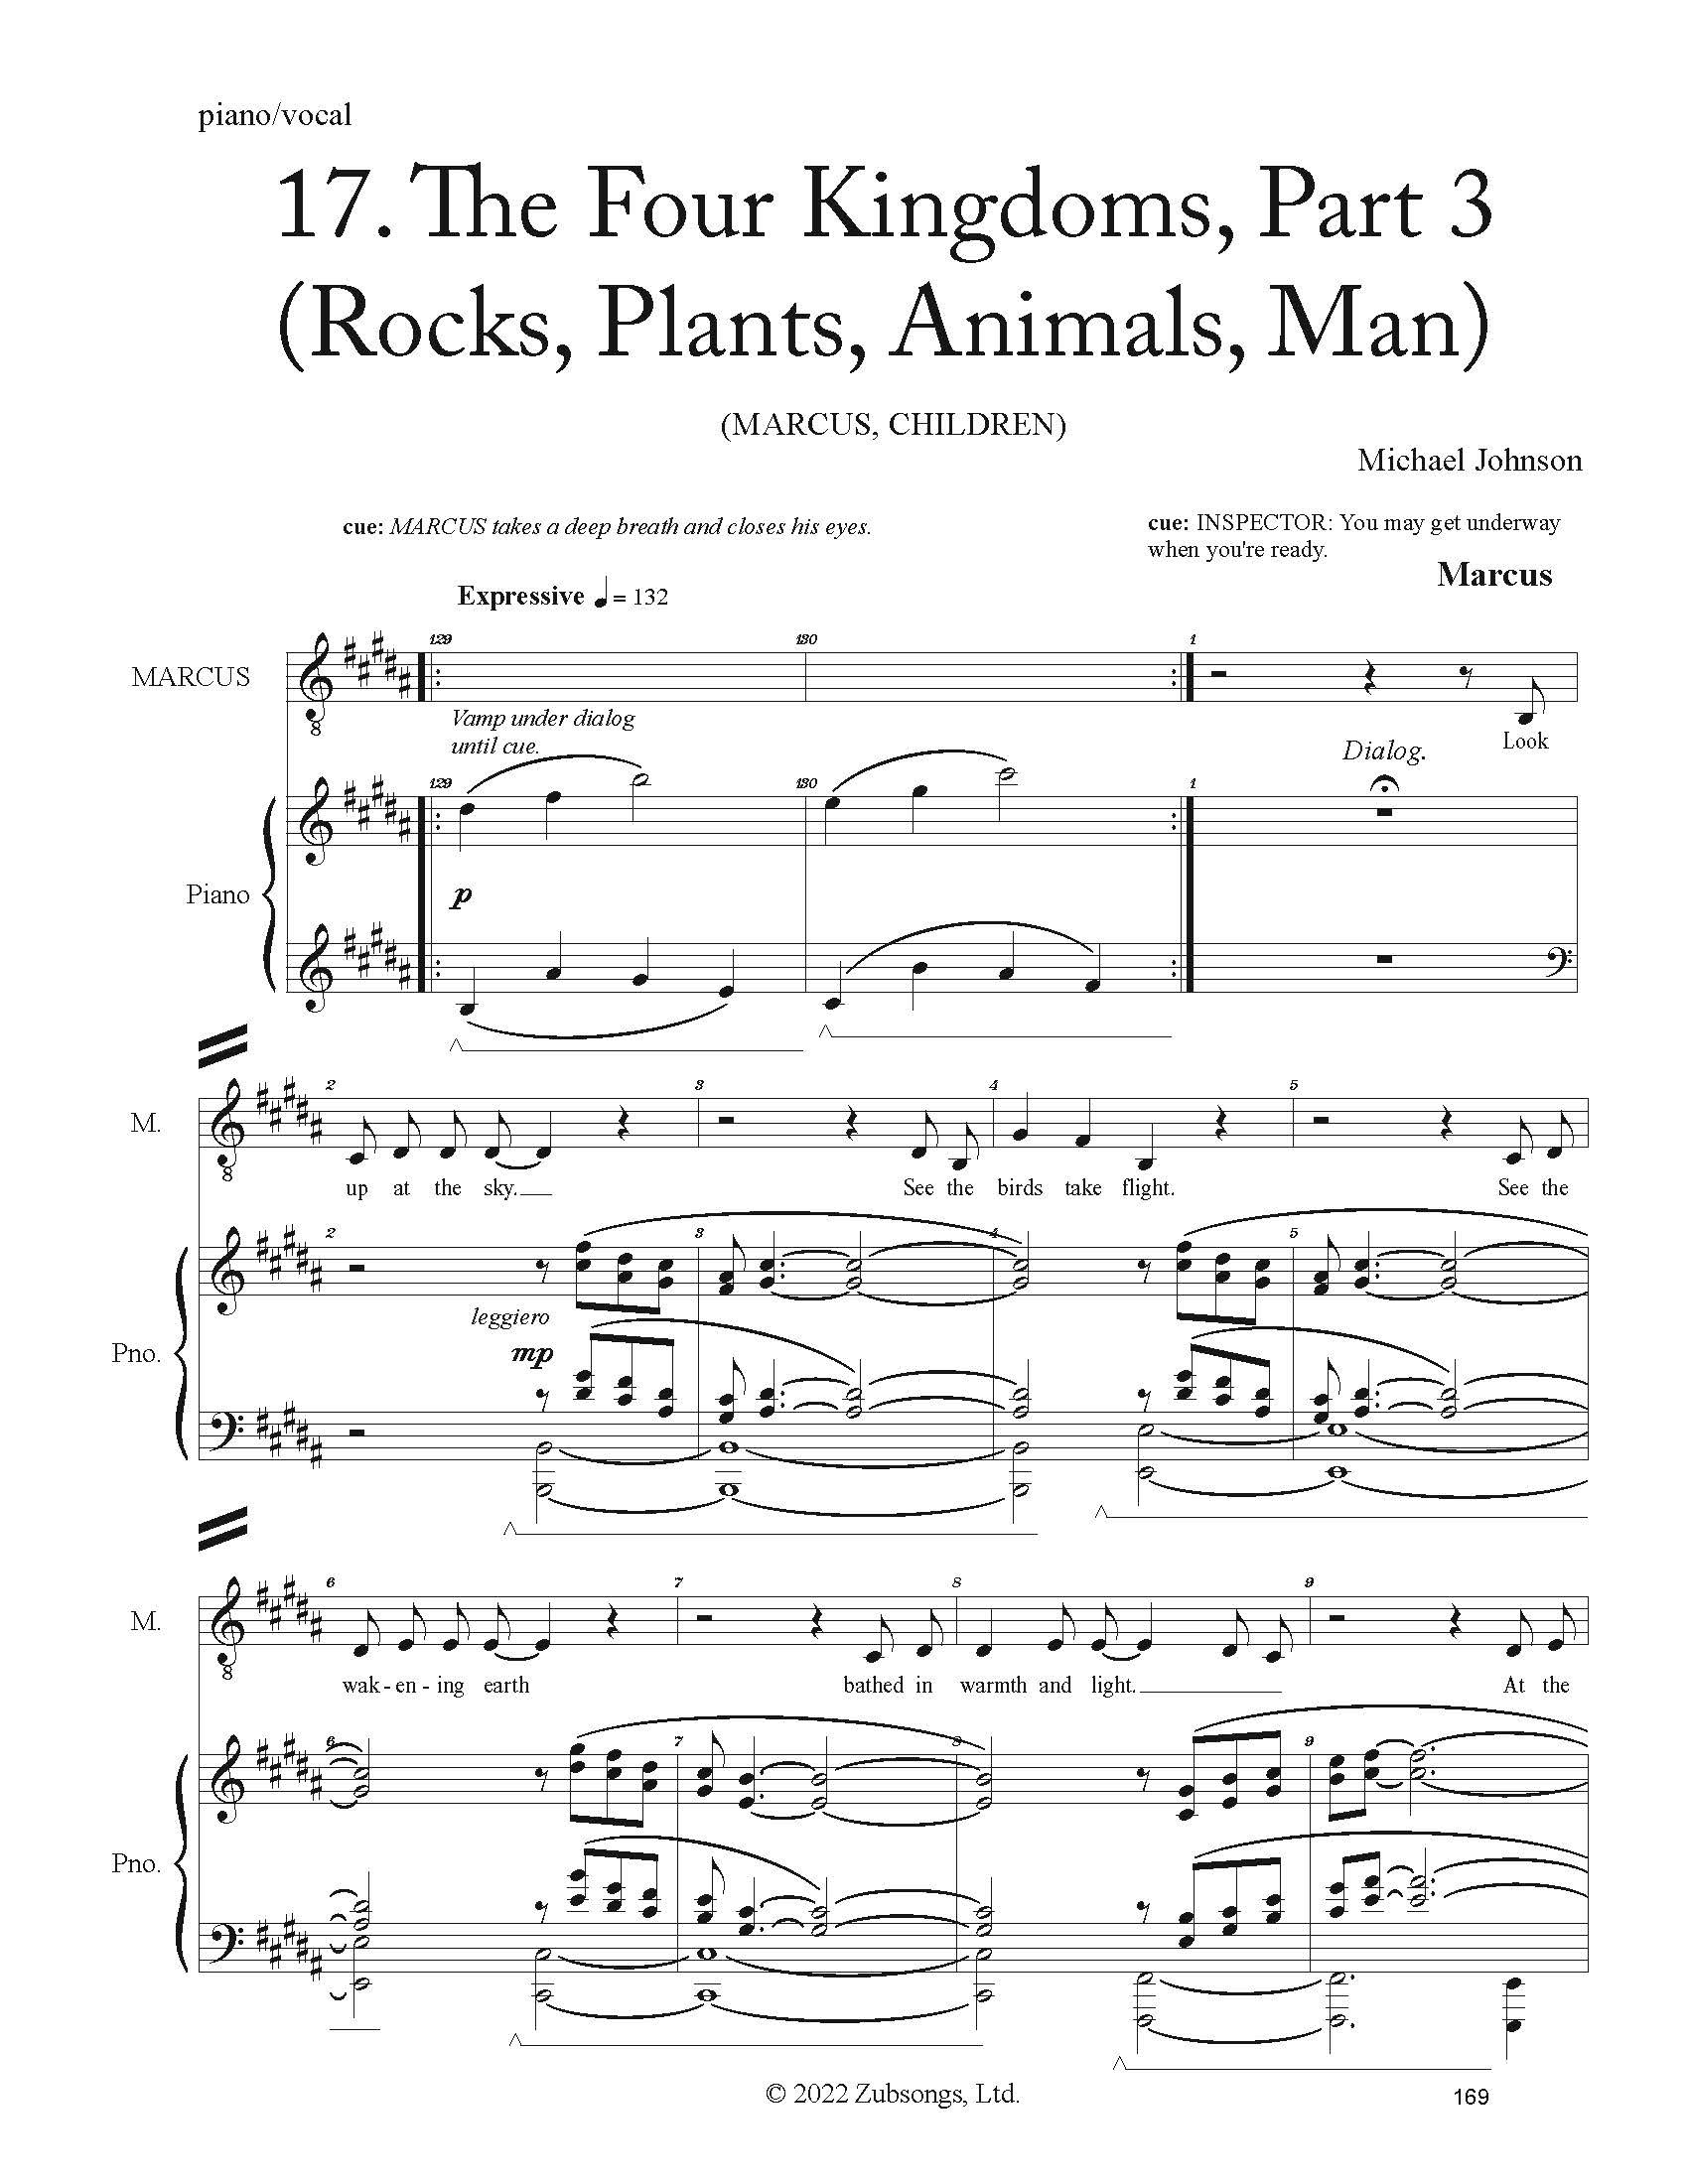 FULL PIANO VOCAL SCORE DRAFT 1 - Score_Page_169.jpg